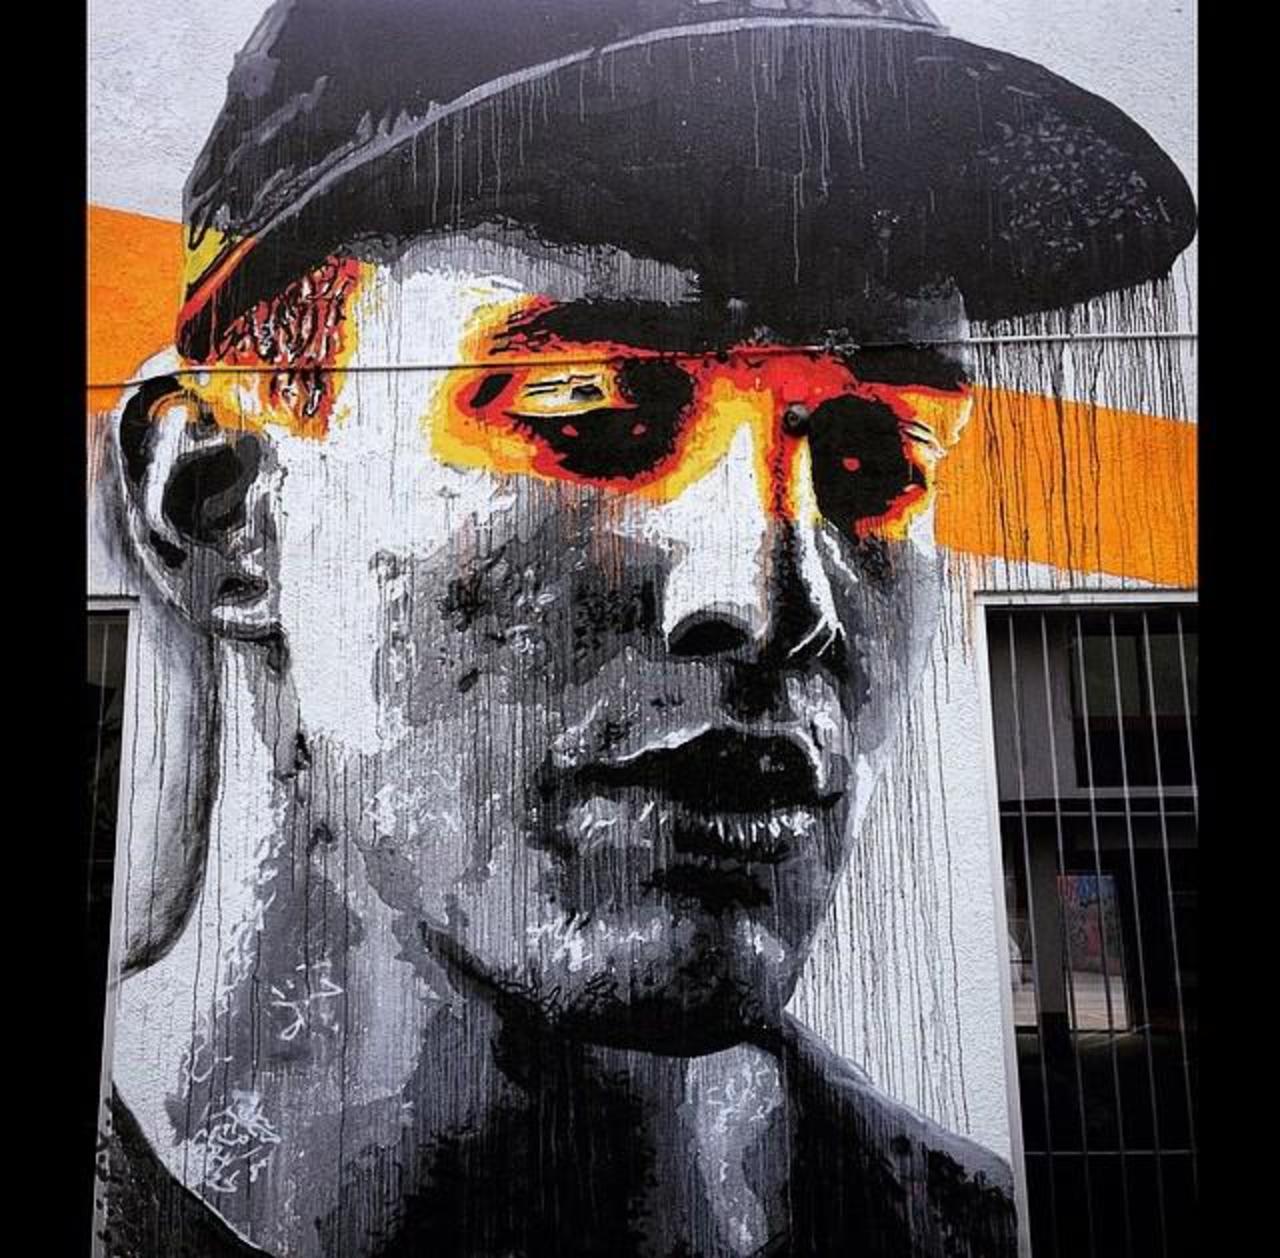 Artist Nils Westergard Street Art portrait in Miami 

#art #graffiti #mural #streetart http://t.co/ujAdj5cEVh